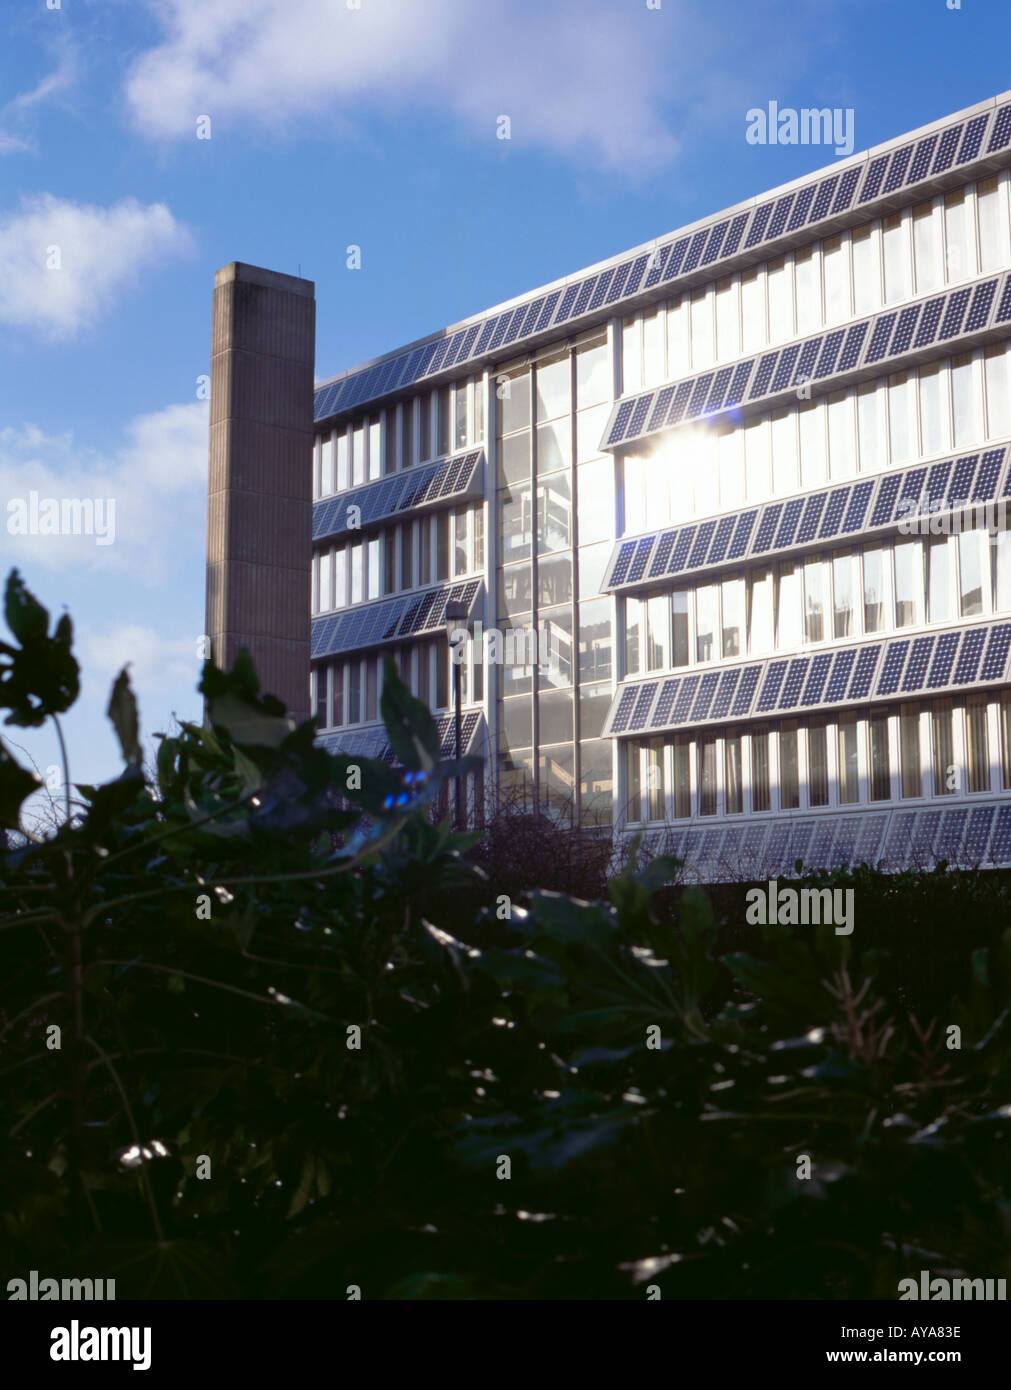 'Projet' Solaire Northumbria, Northumbria Building, Université de Northumbria, Newcastle-upon-Tyne, Tyne et Wear, Angleterre, Royaume-Uni. Banque D'Images